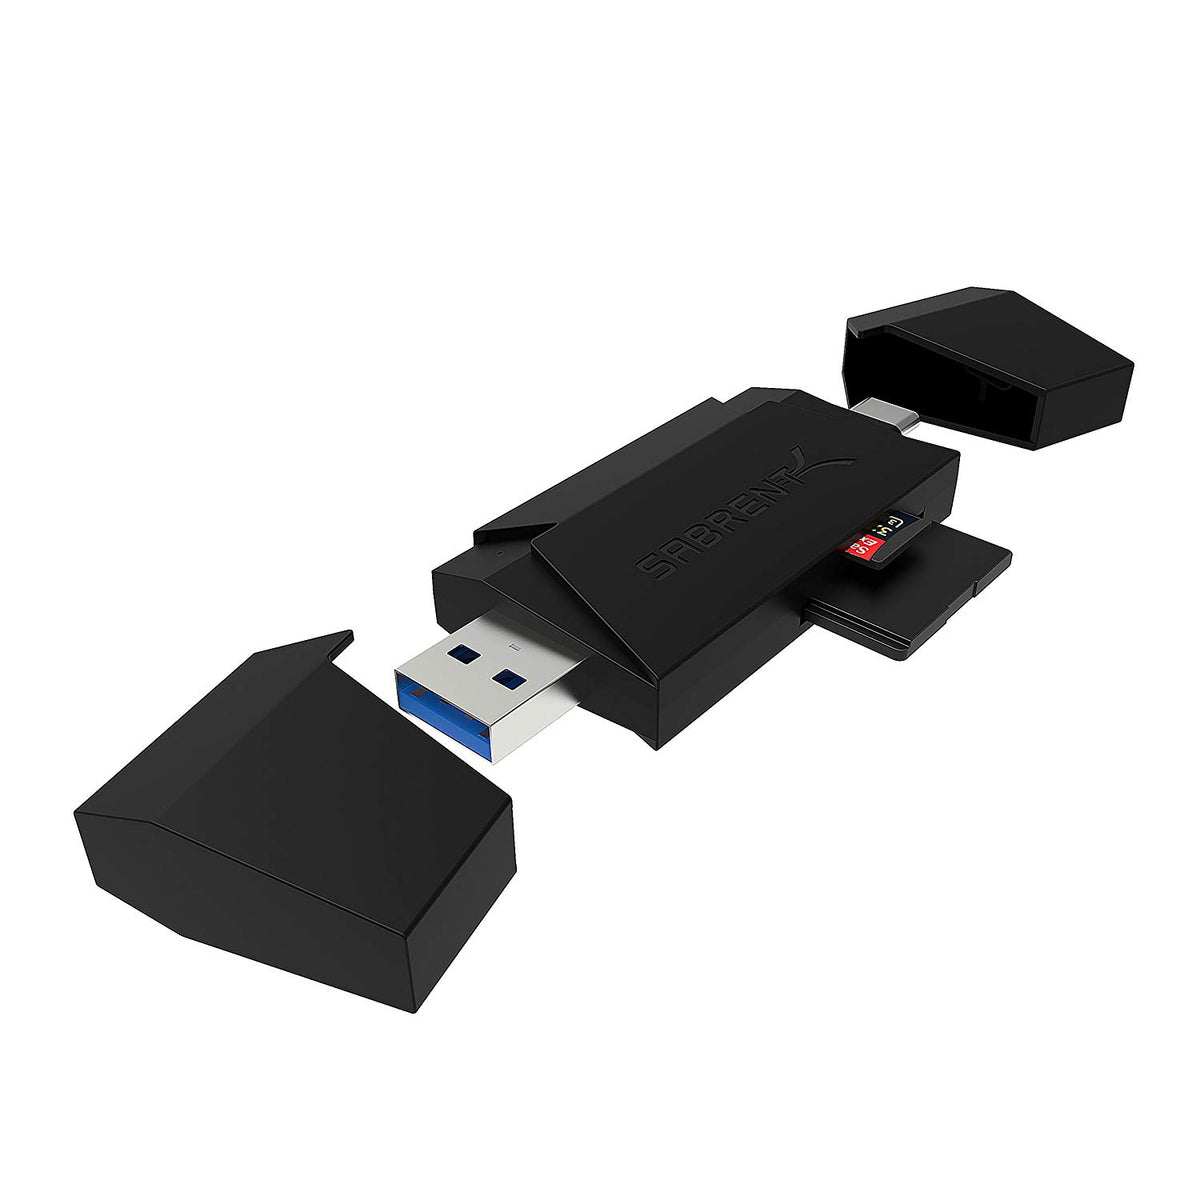 2-Slot Type-C OTG and USB 3.0 Flash Memory Card Reader